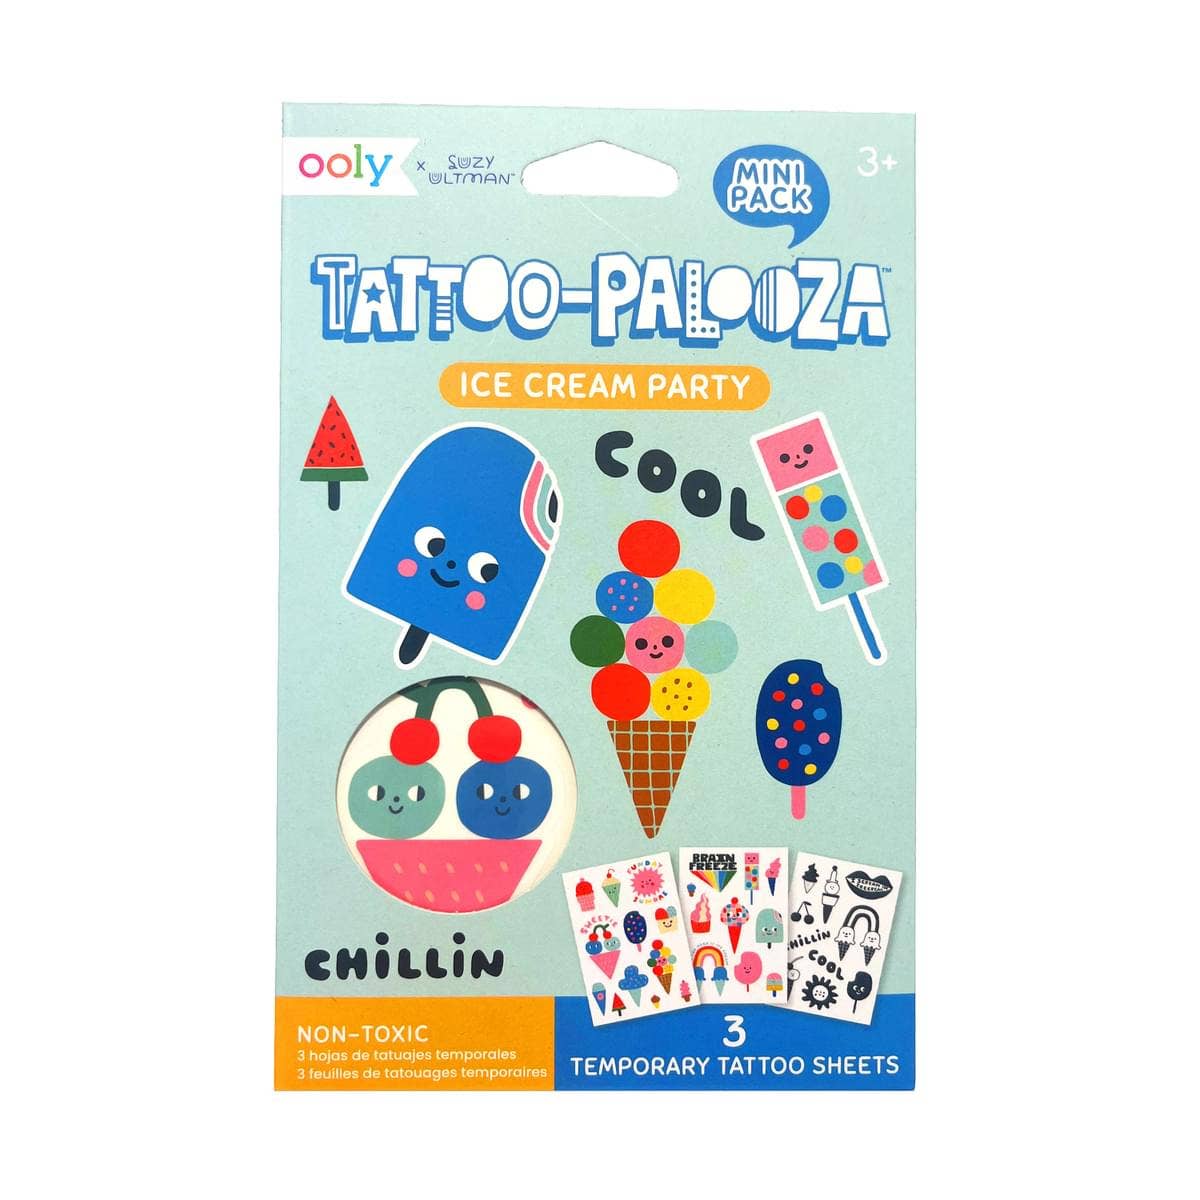 OOLY Mini Tattoo Palooza | Ice Cream Party